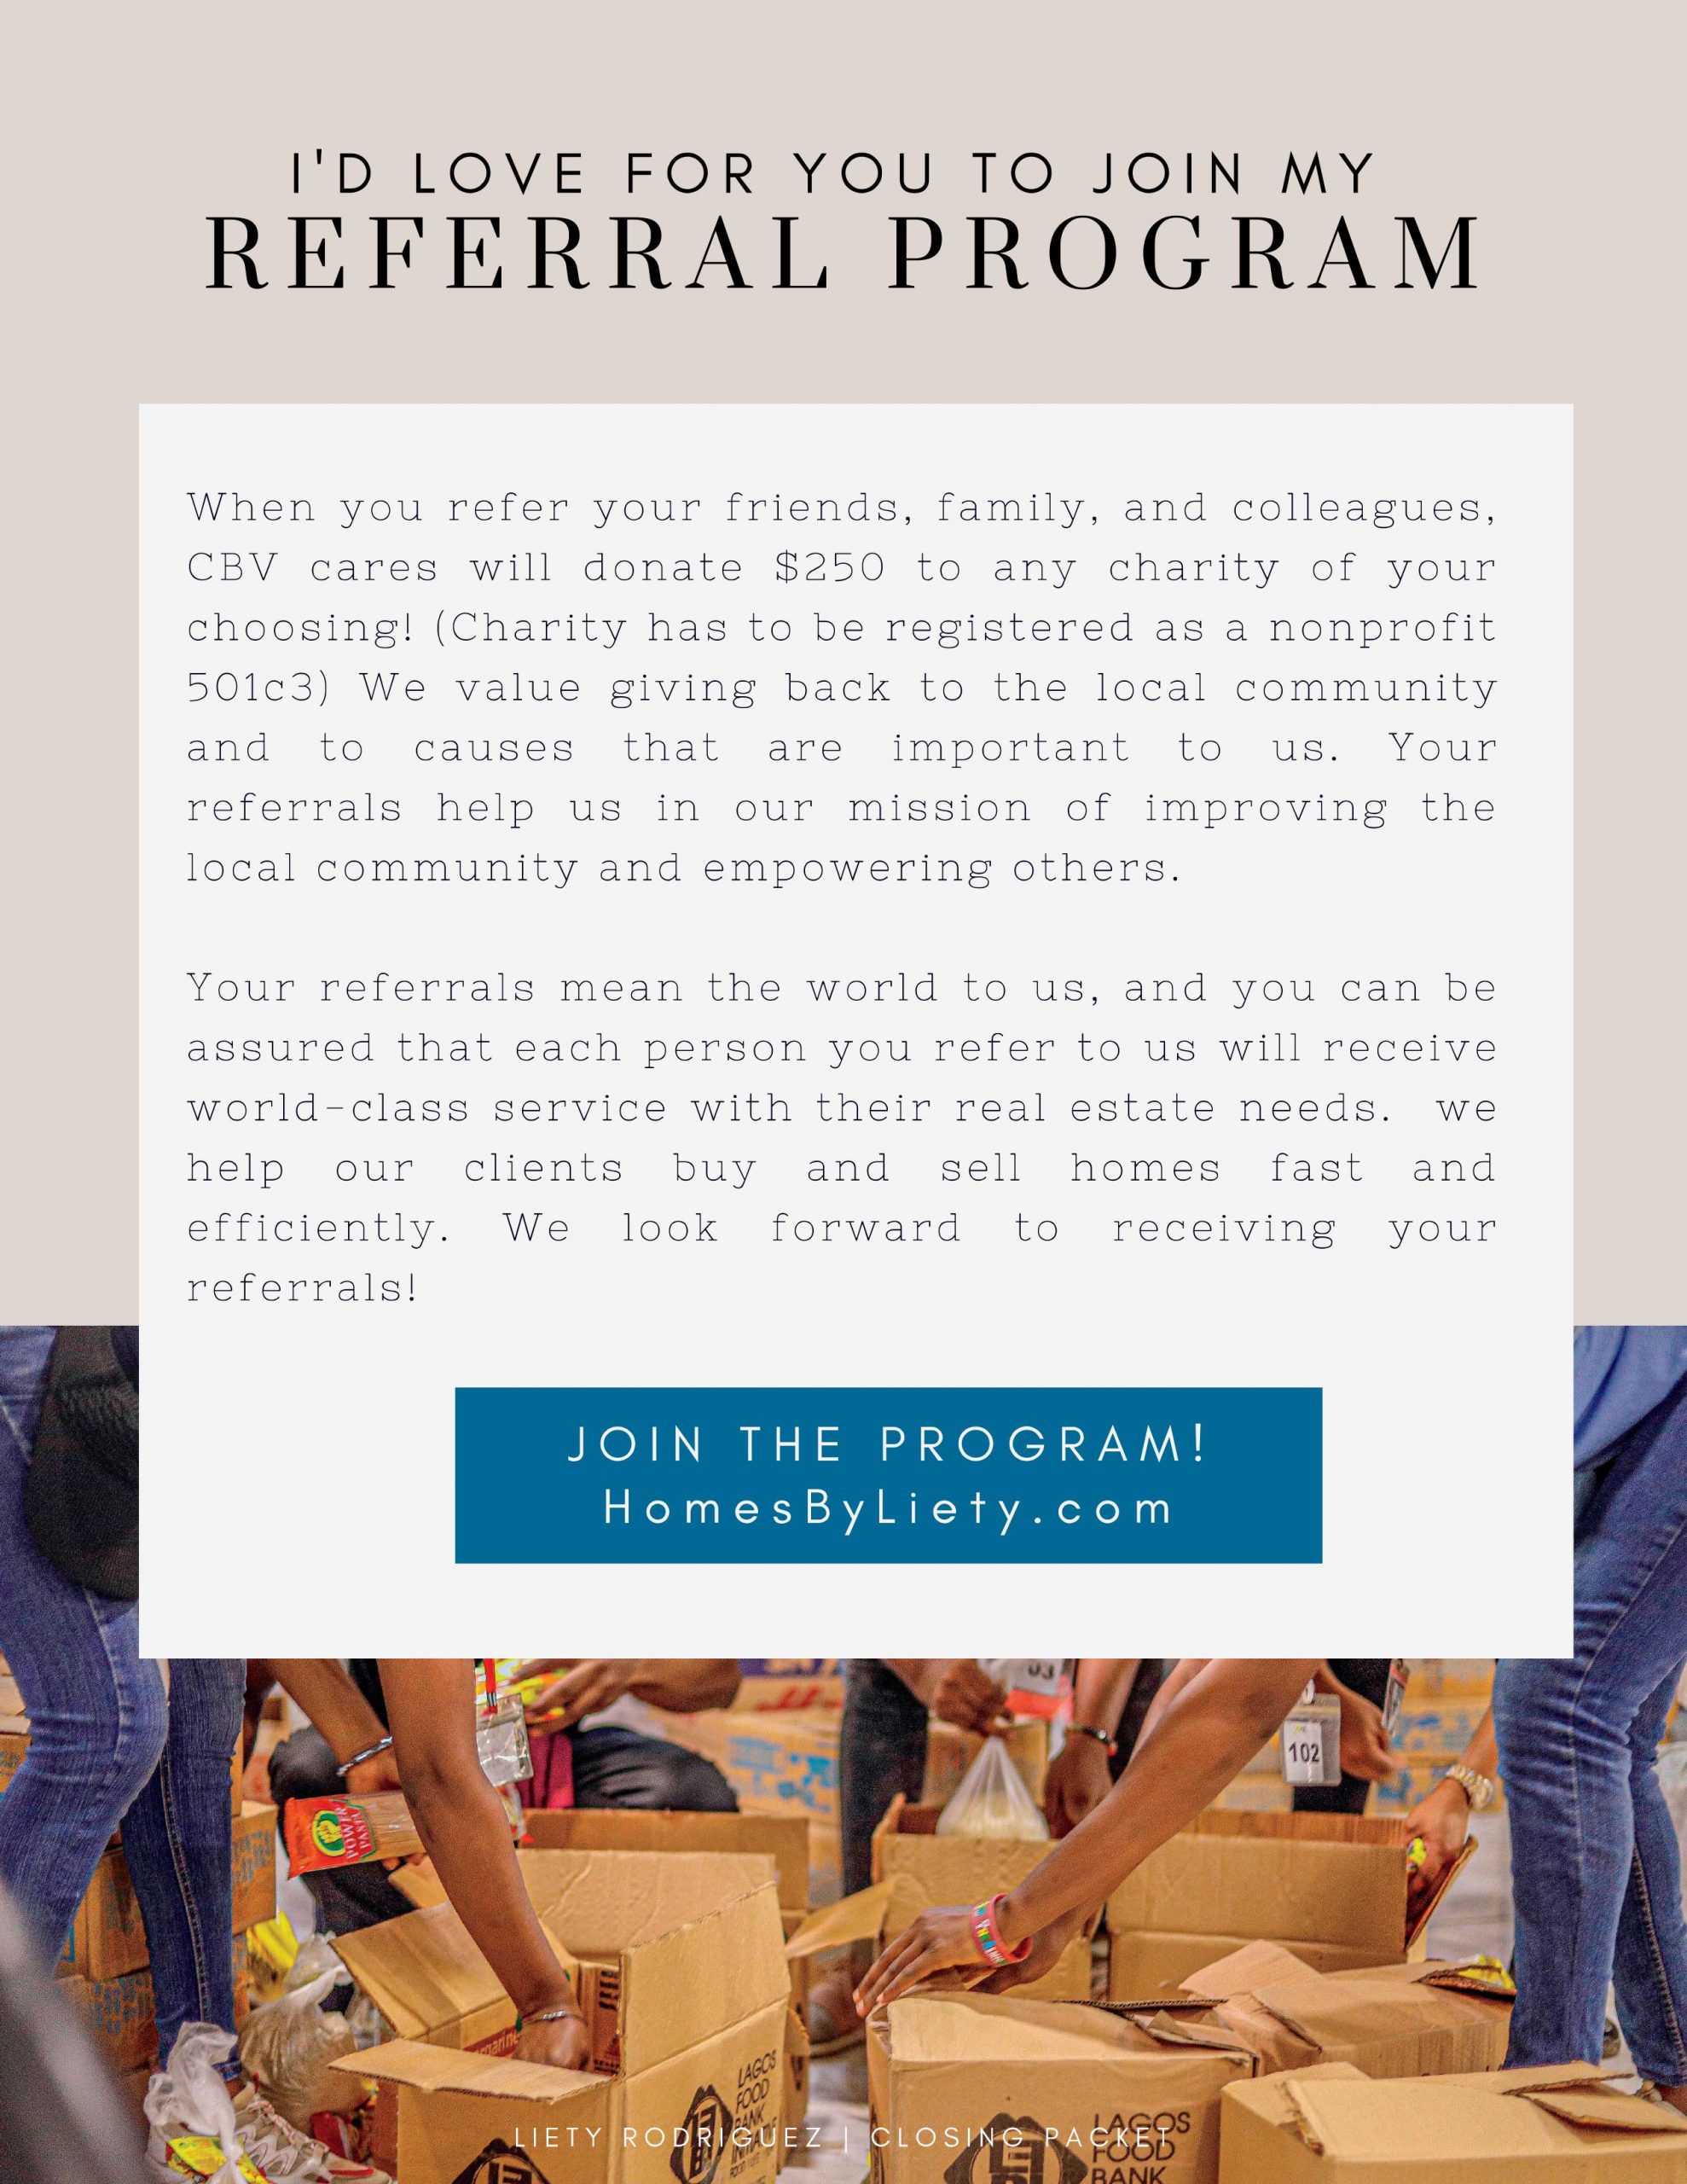 Join my referral program